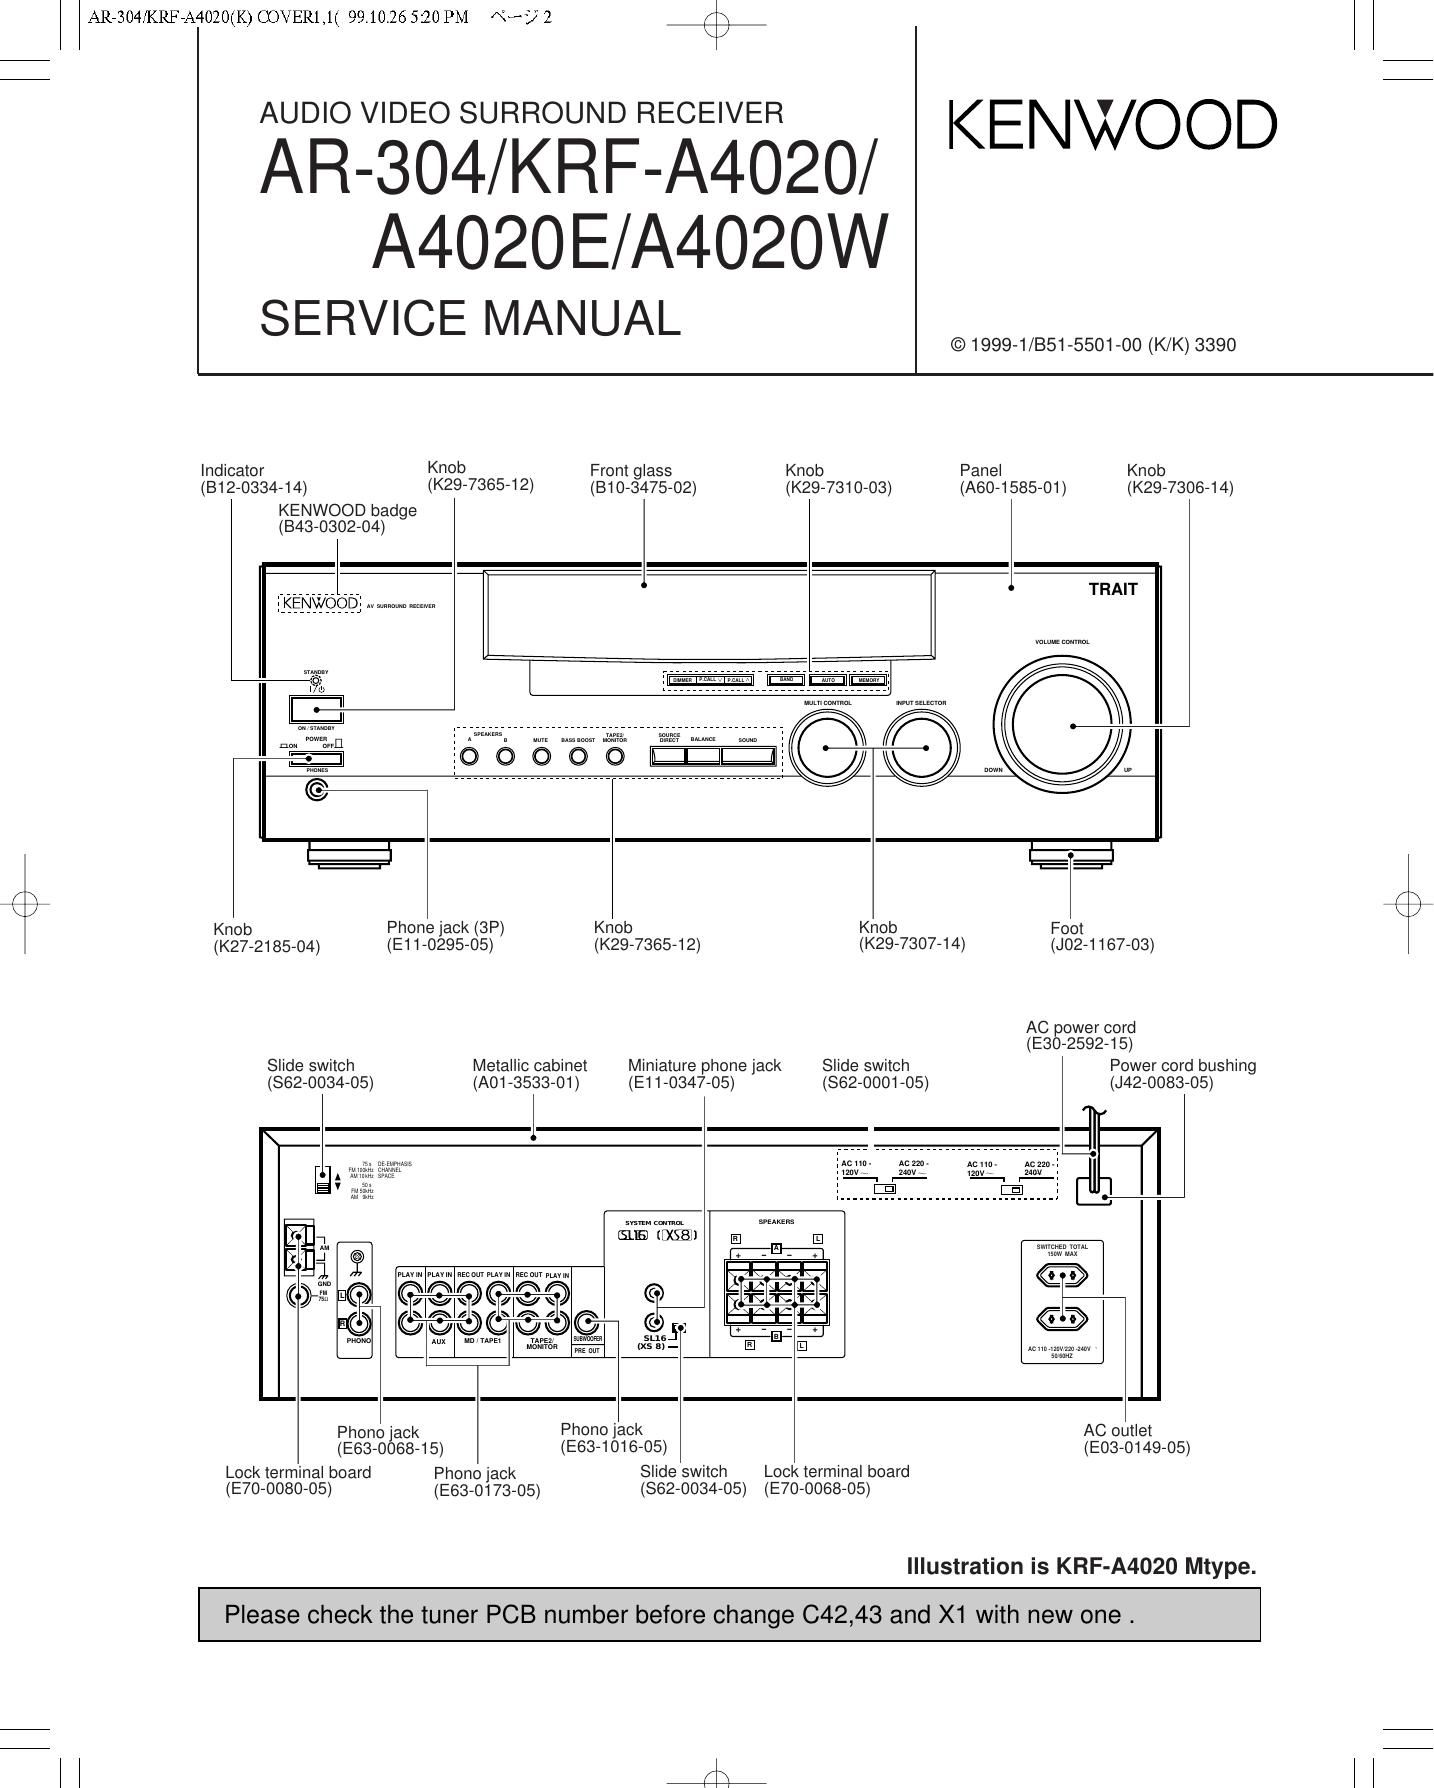 Kenwood A 4020 E Service Manual